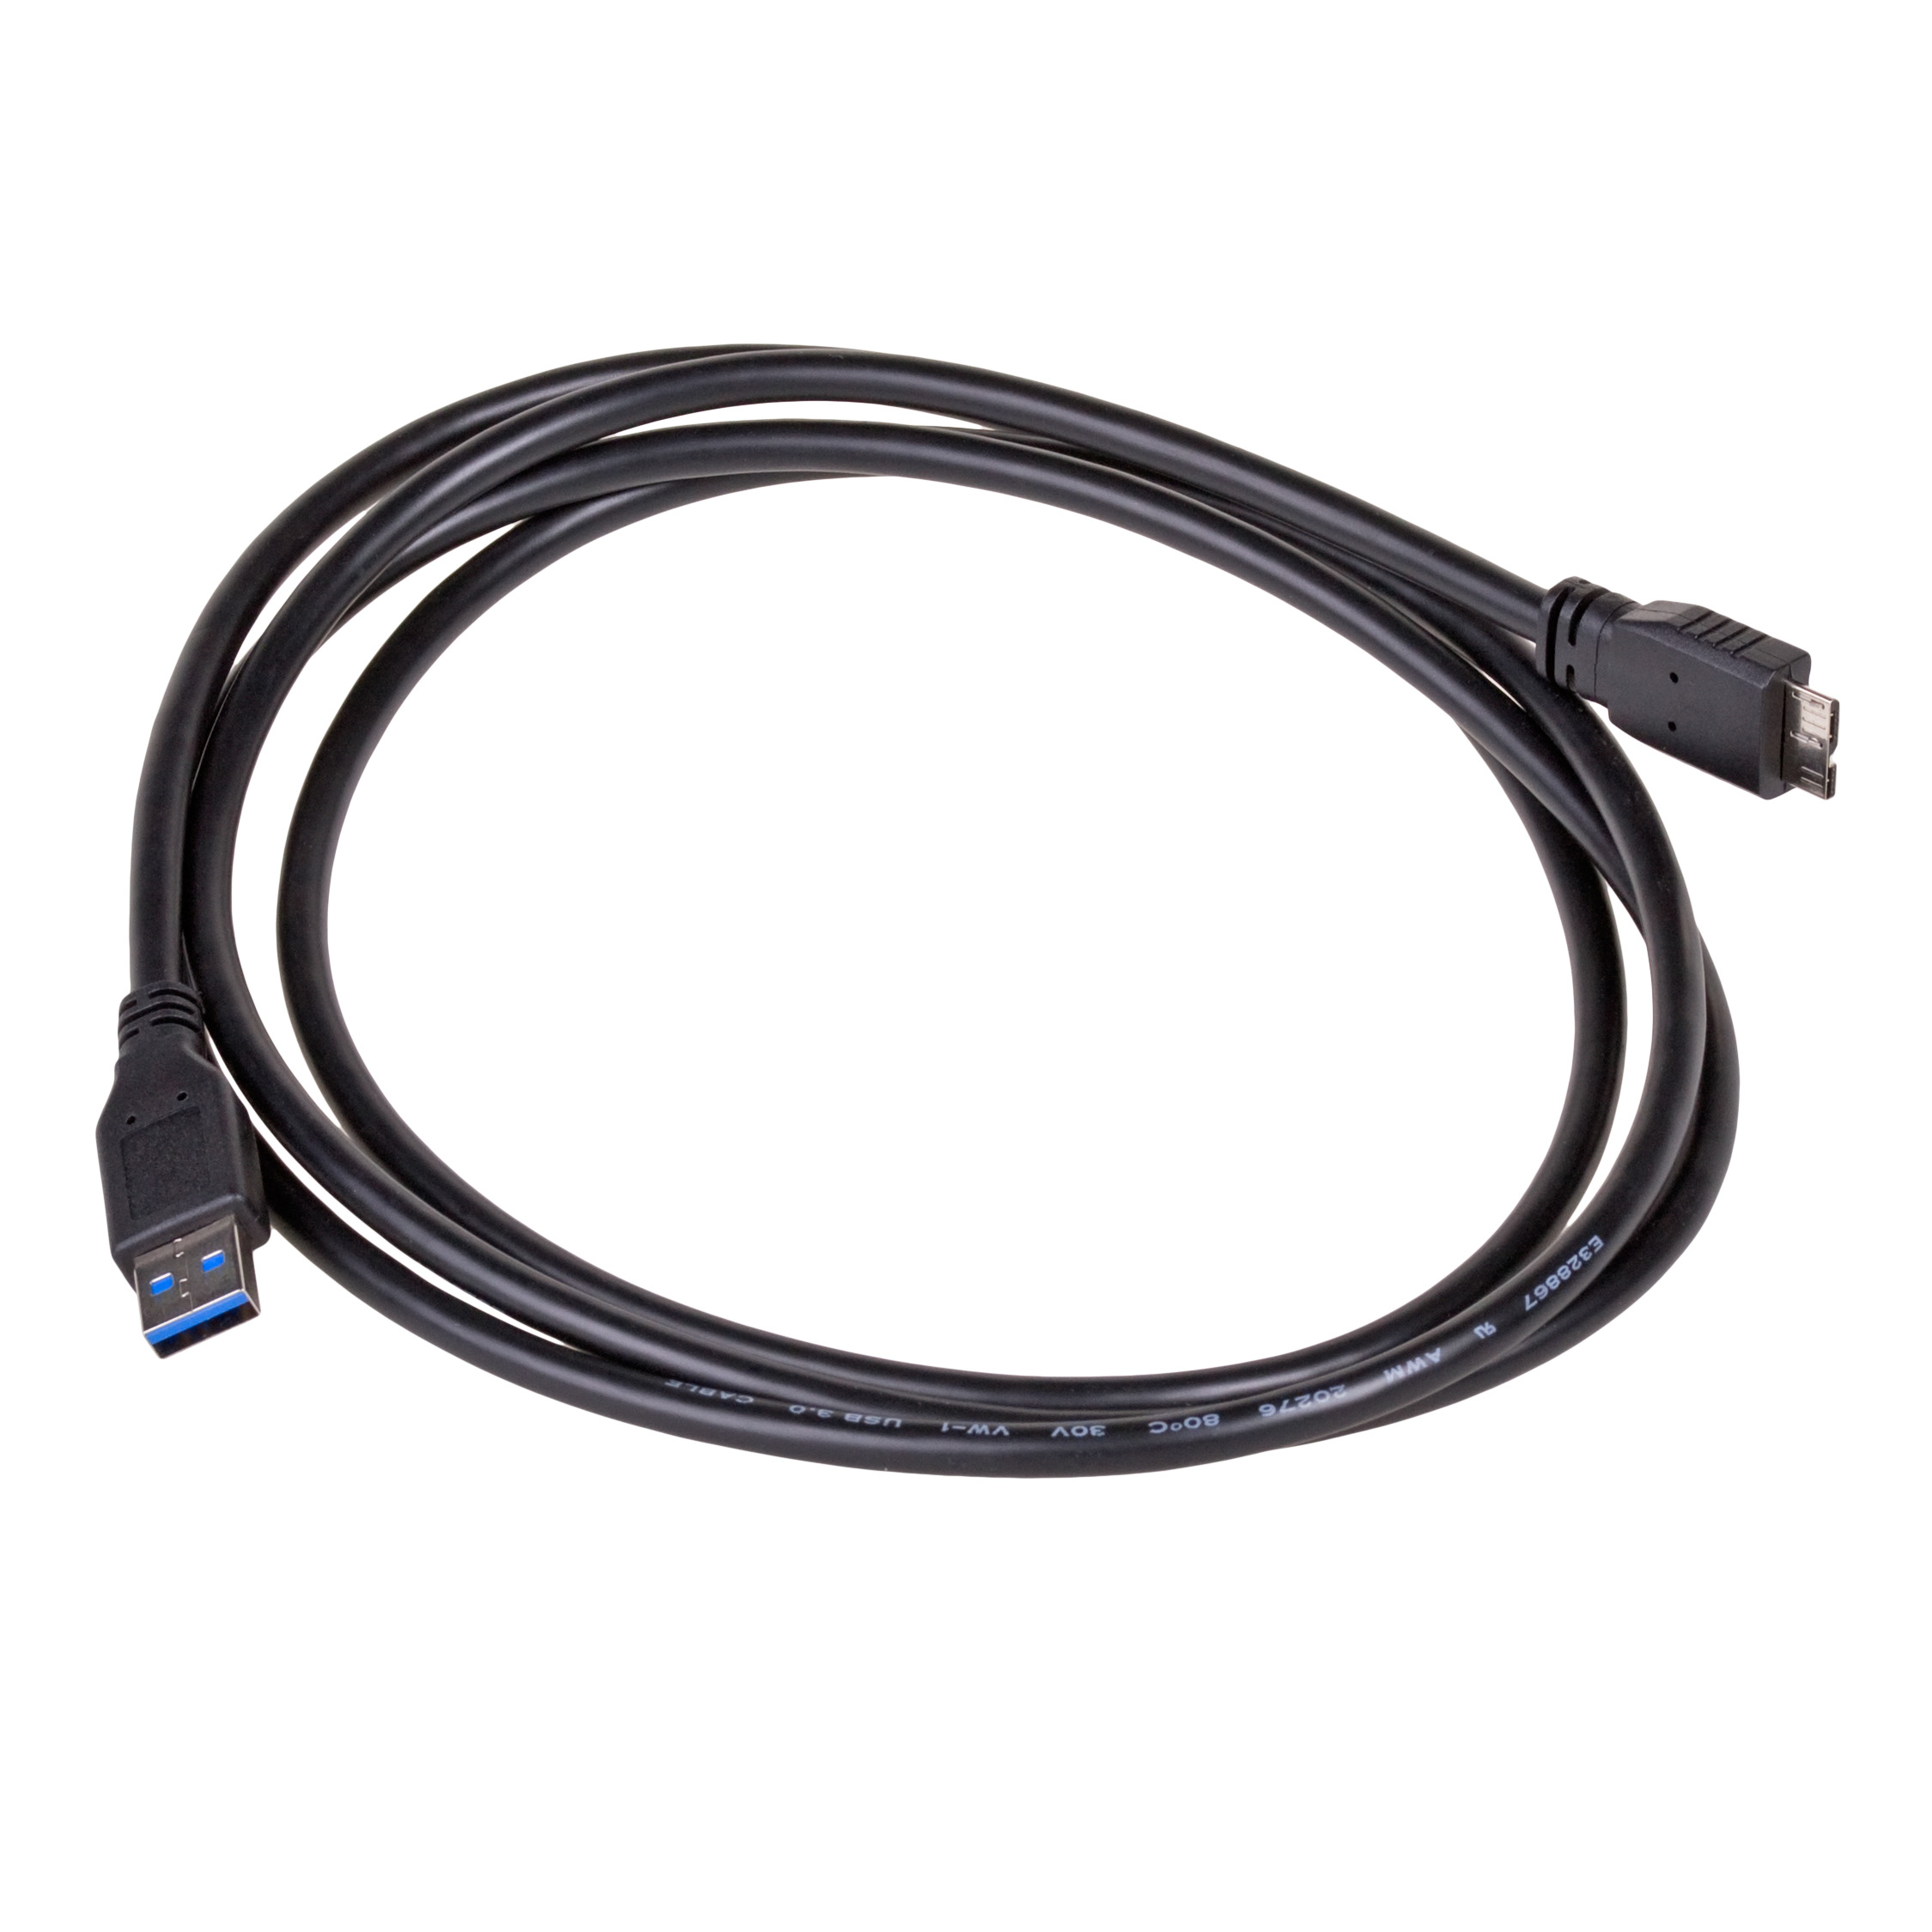 Cable USB A / USB B 3m AK-USB-12